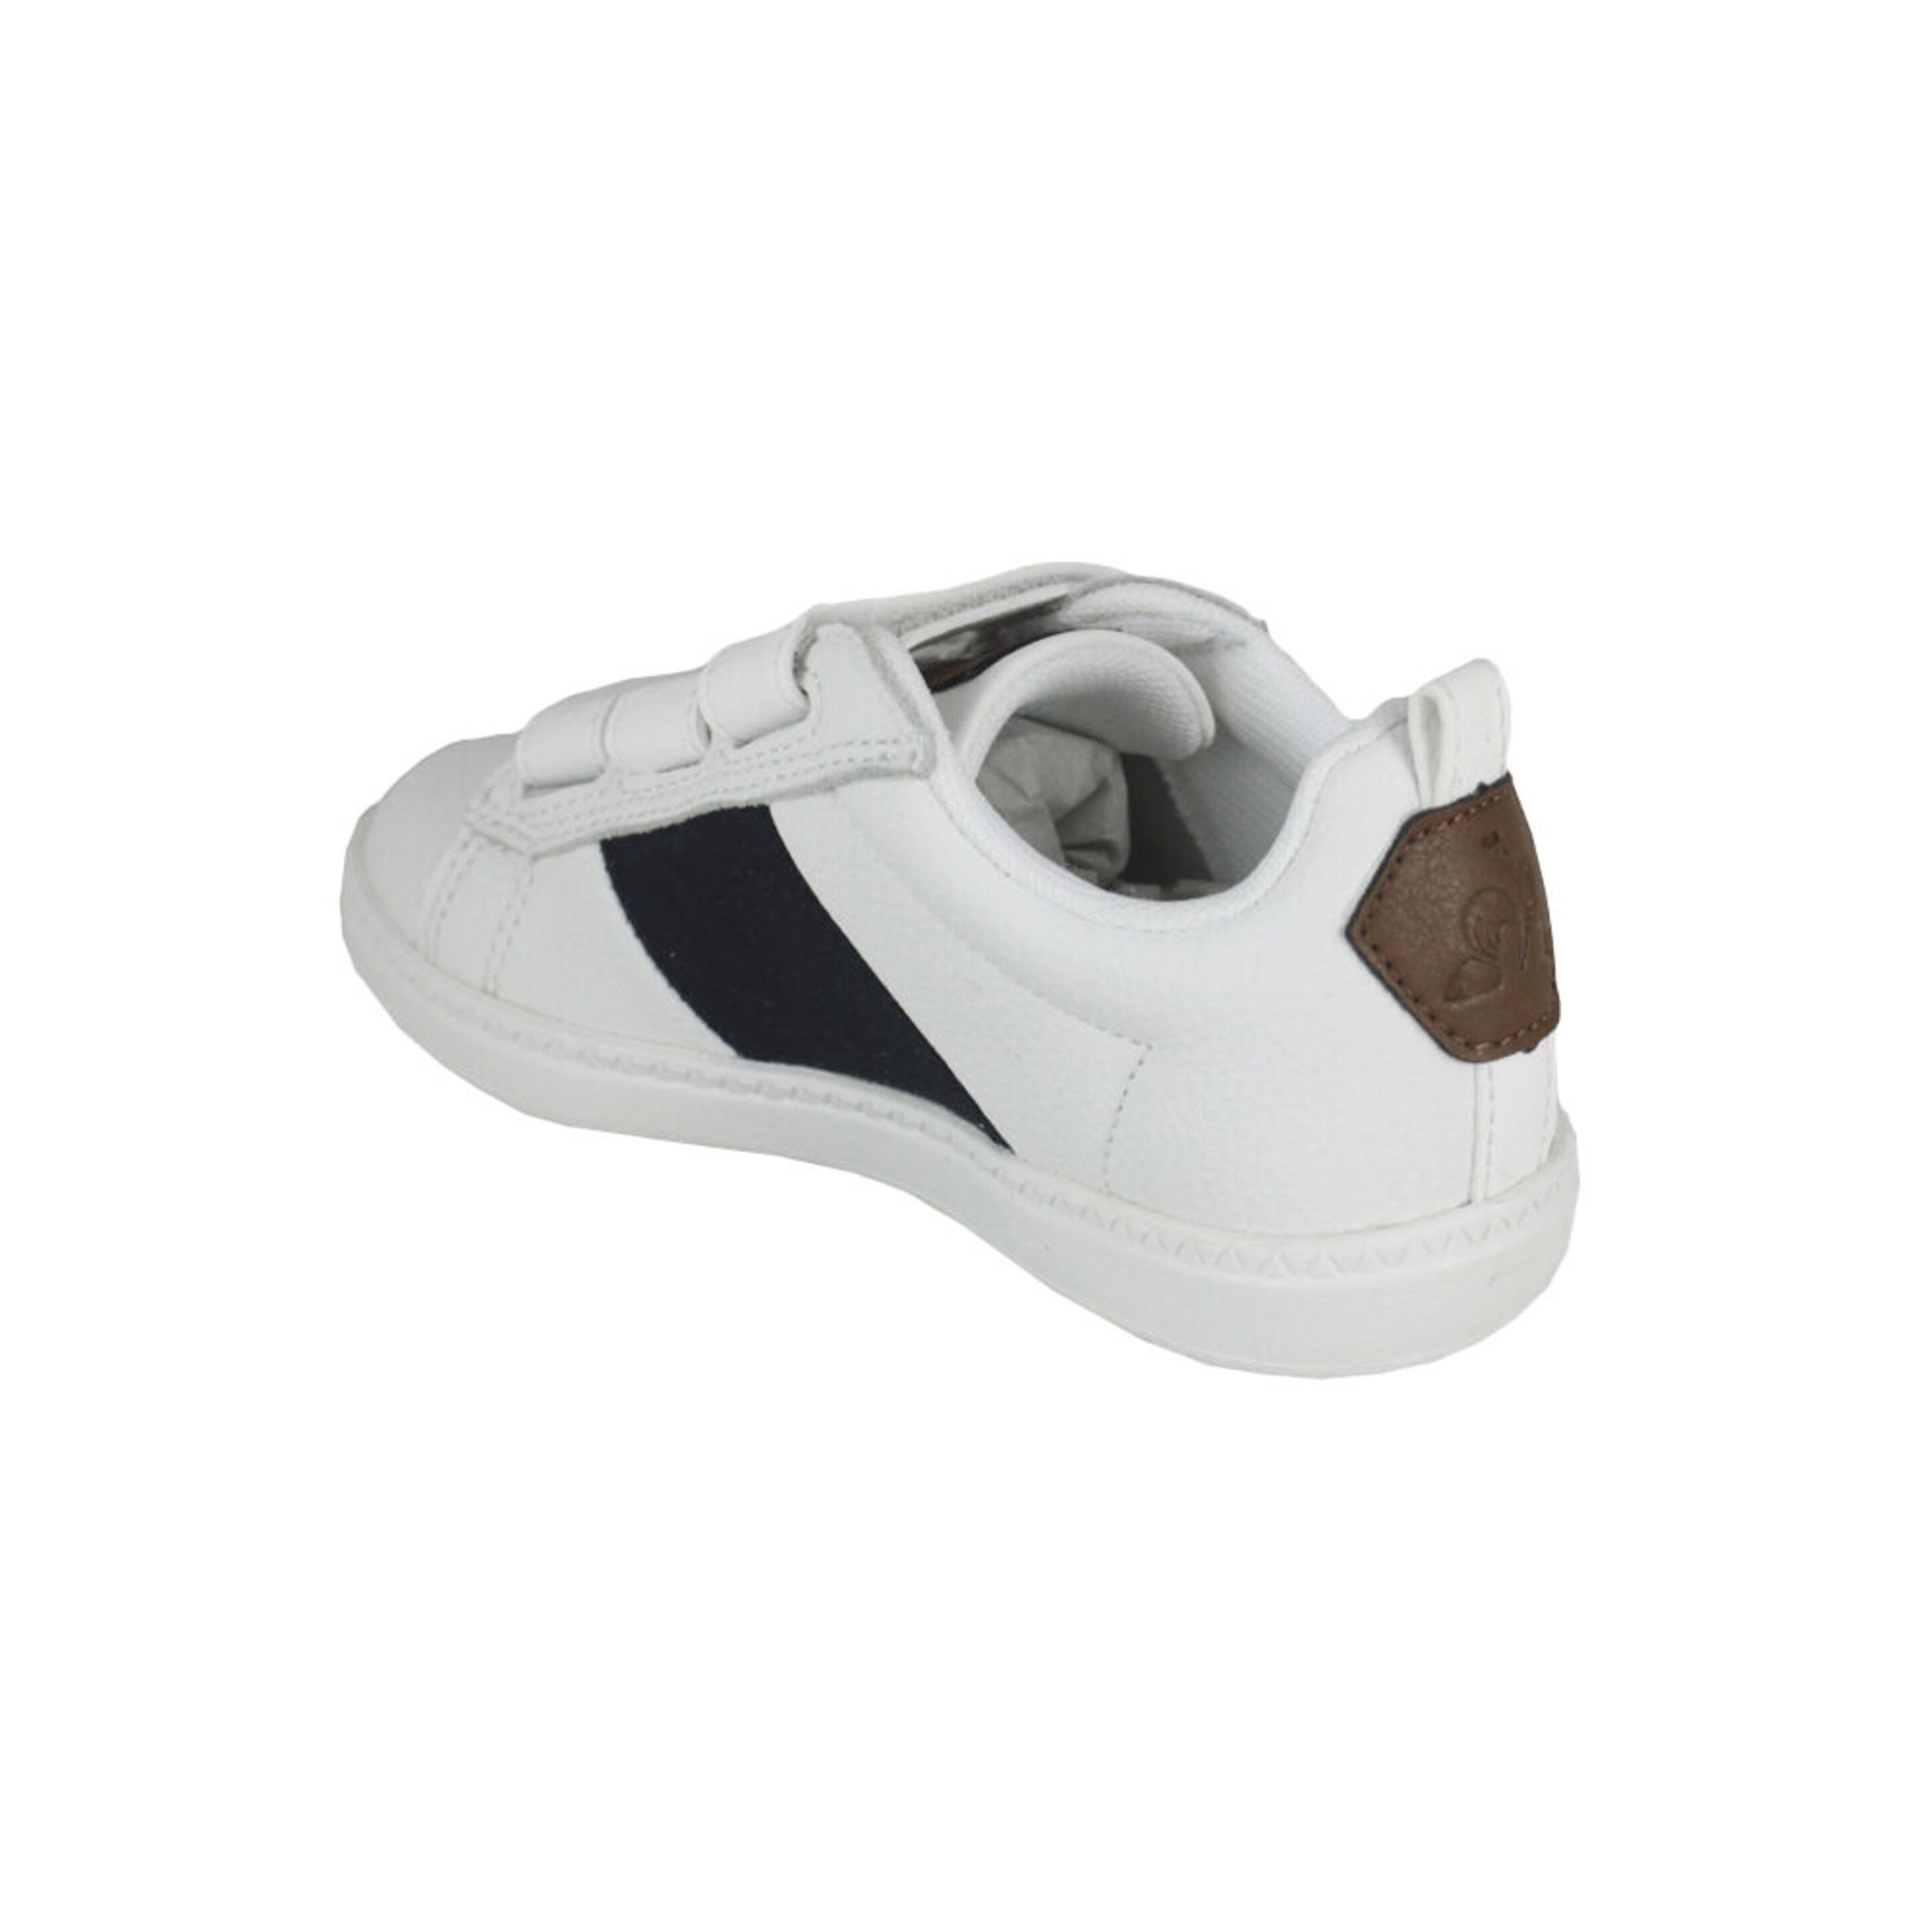 Zapatillas Le Coq Sportif Courtclassic Ps Workwear 2120484 - Zapatillas De Moda Para Hombre  MKP